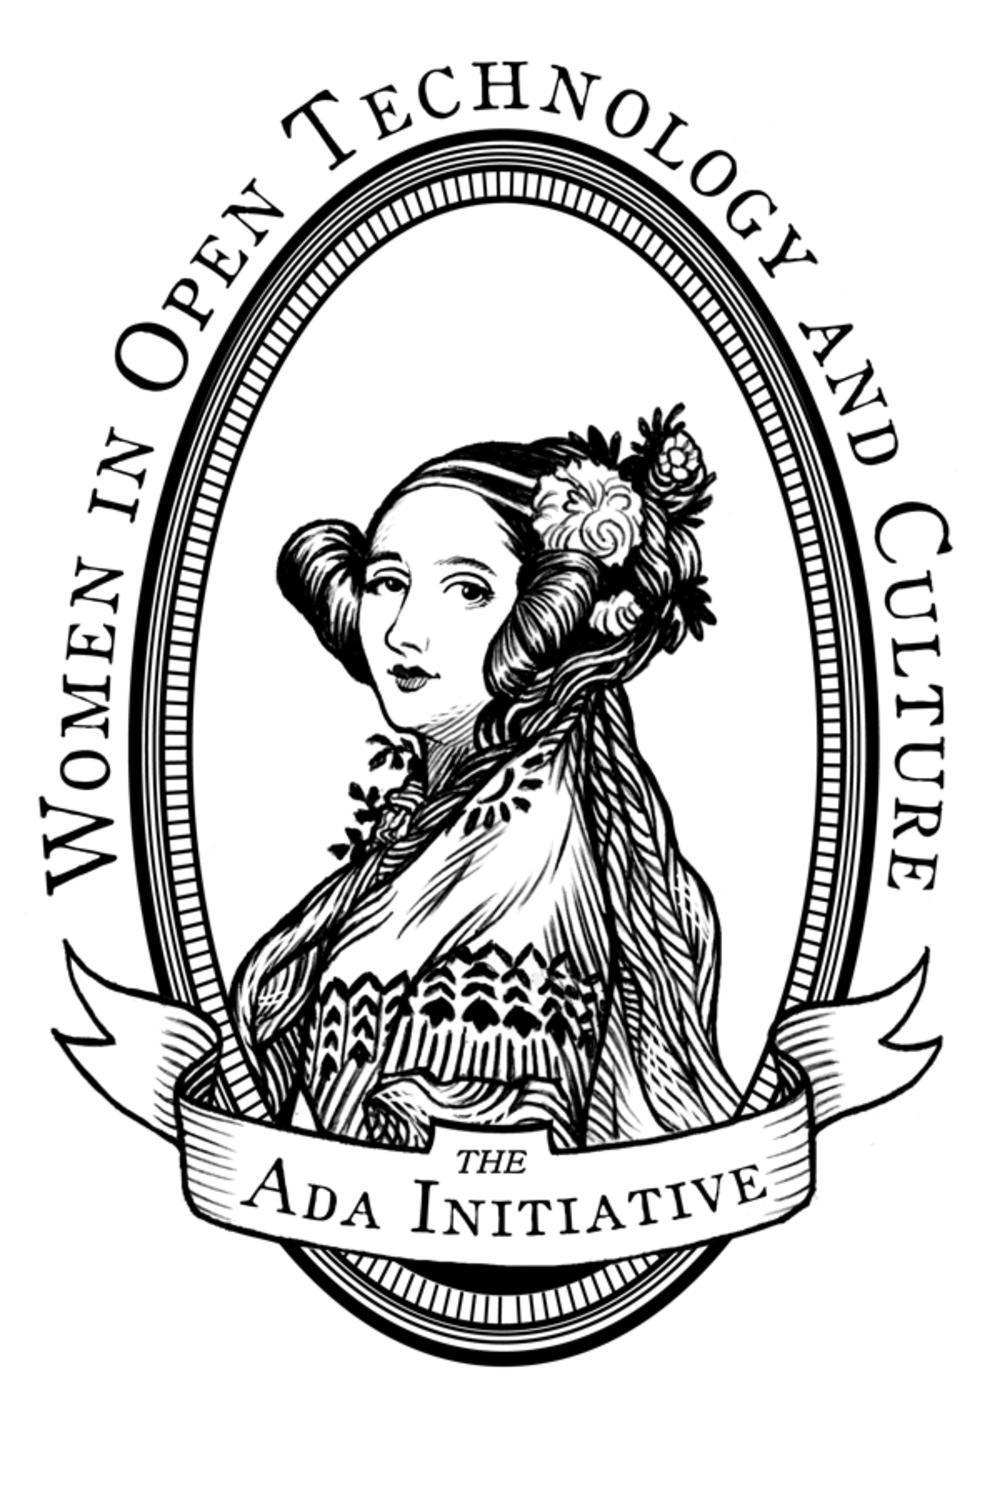 Portrait Logo - Ada Initiative logo Ada Lovelace portrait, black and white